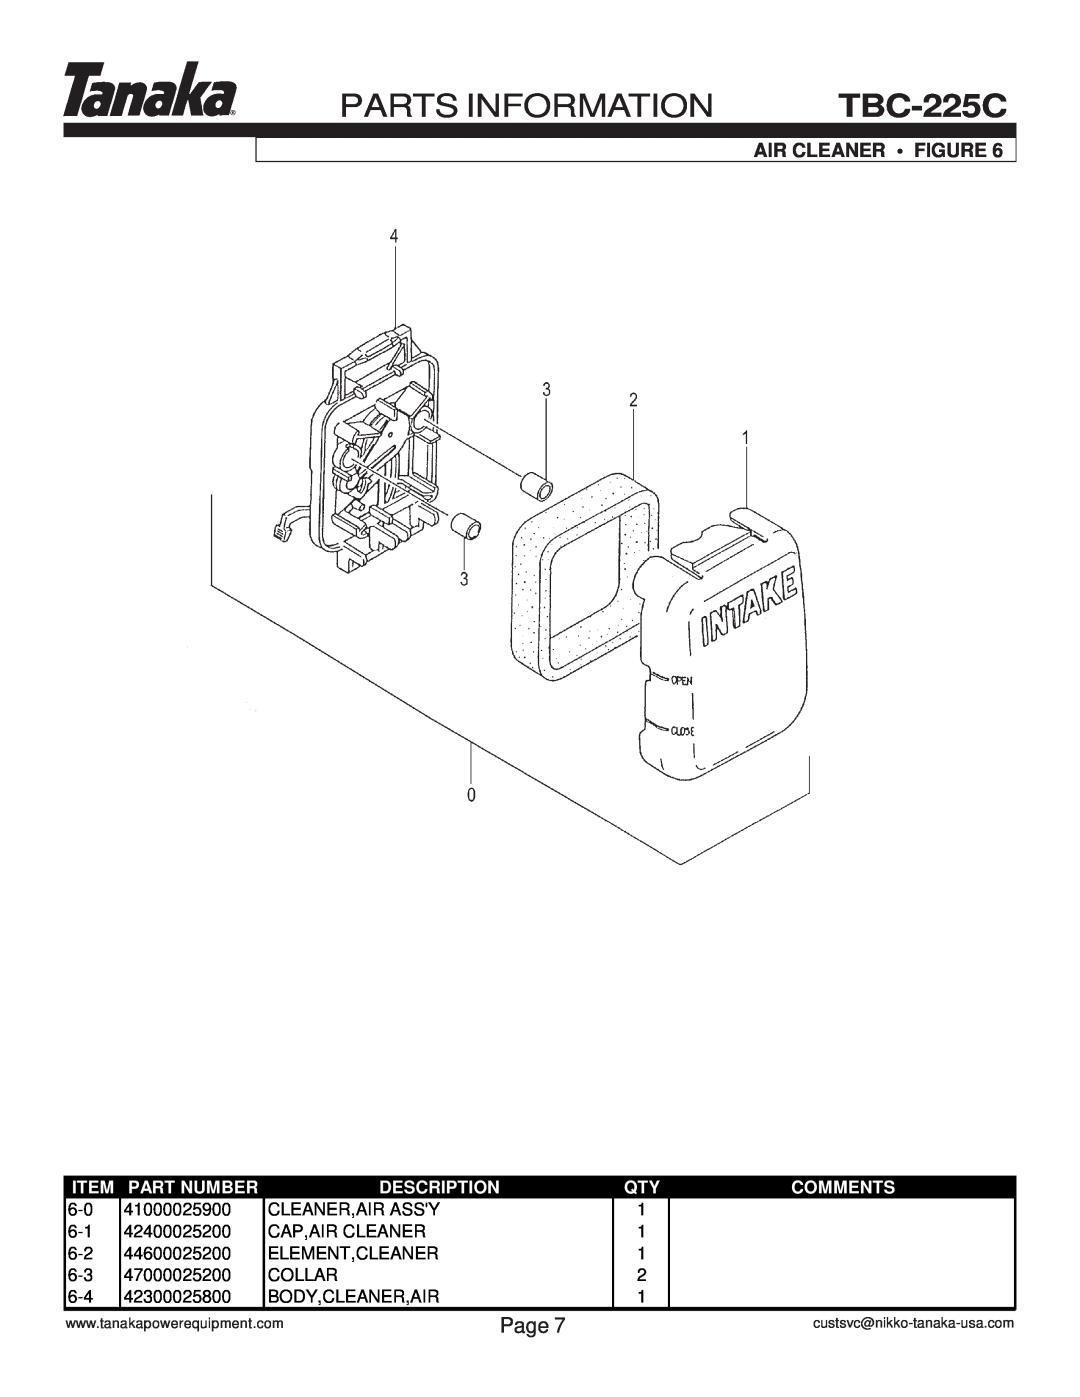 Tanaka TBC-225C manual Parts Information, Air Cleaner Figure, Page, Part Number, Description, Comments 